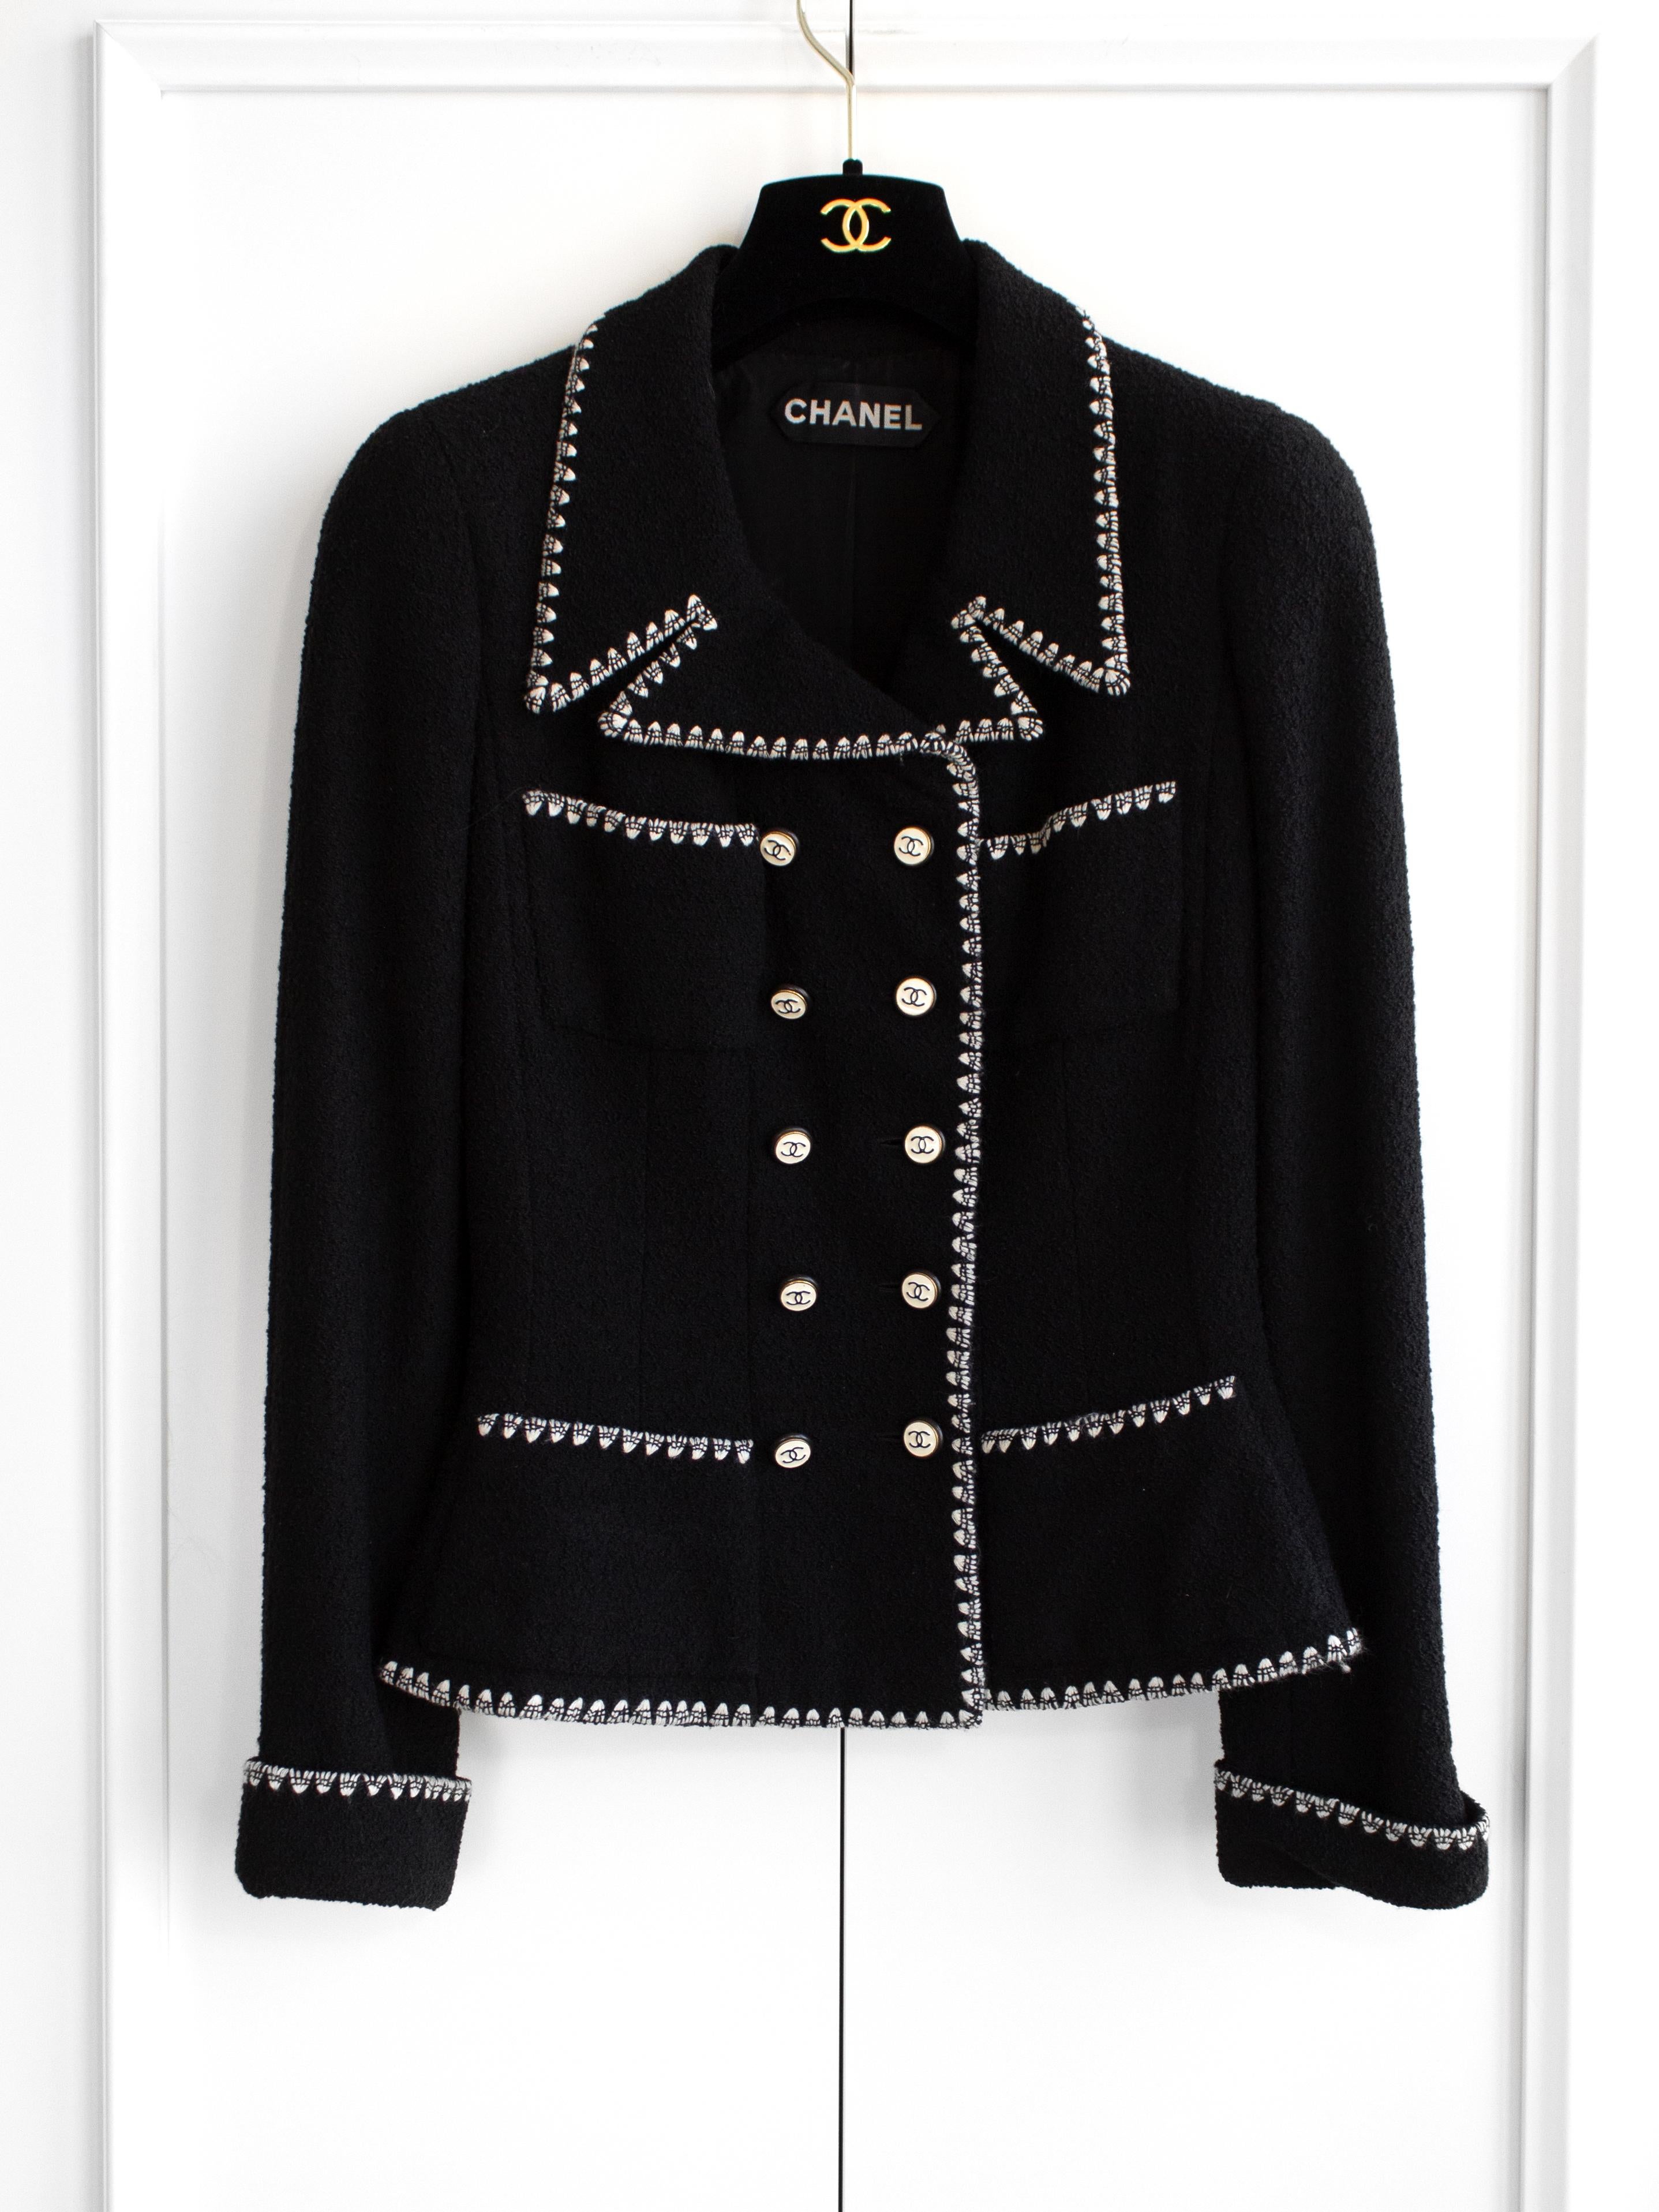 Chanel Vintage Haute Couture S/S 1995 Black White CC Tweed Jacket Skirt Suit 4